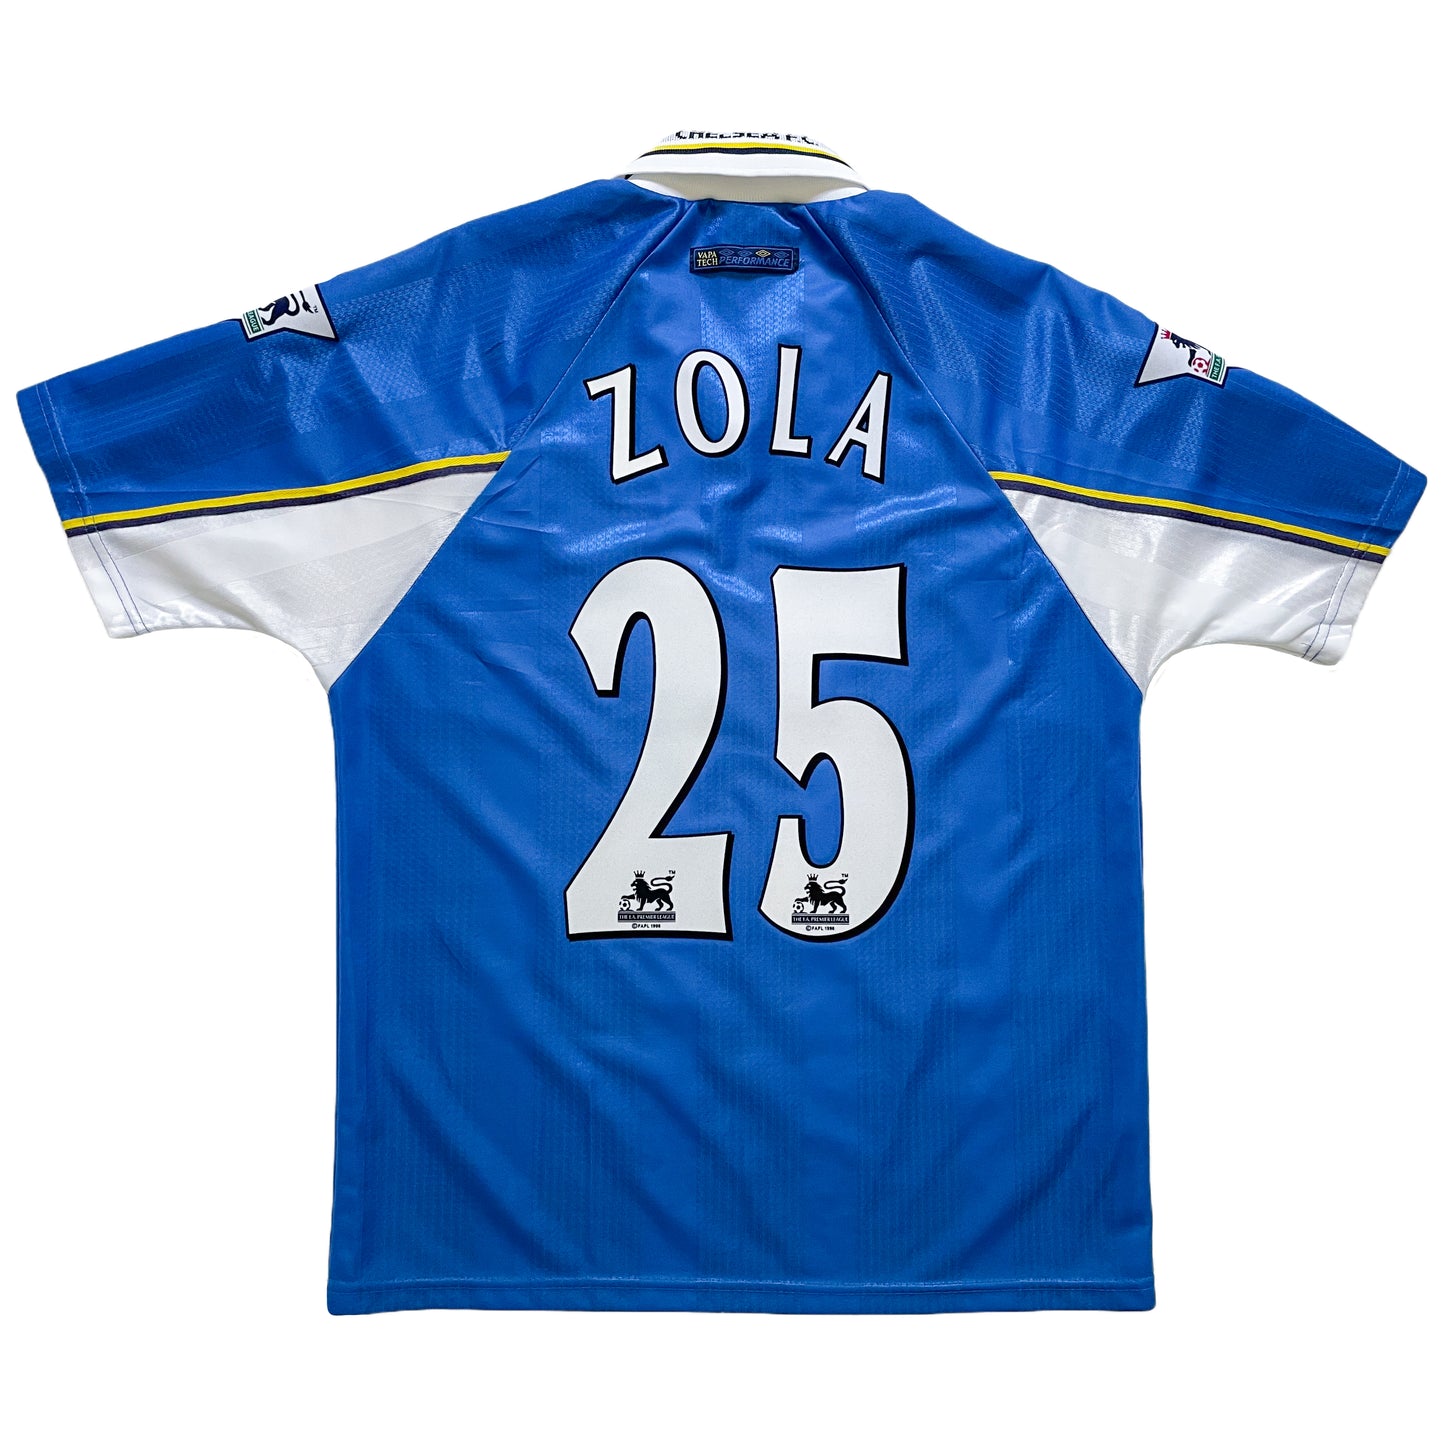 1997-1999 Chelsea FC home shirt #25 Zola (M)